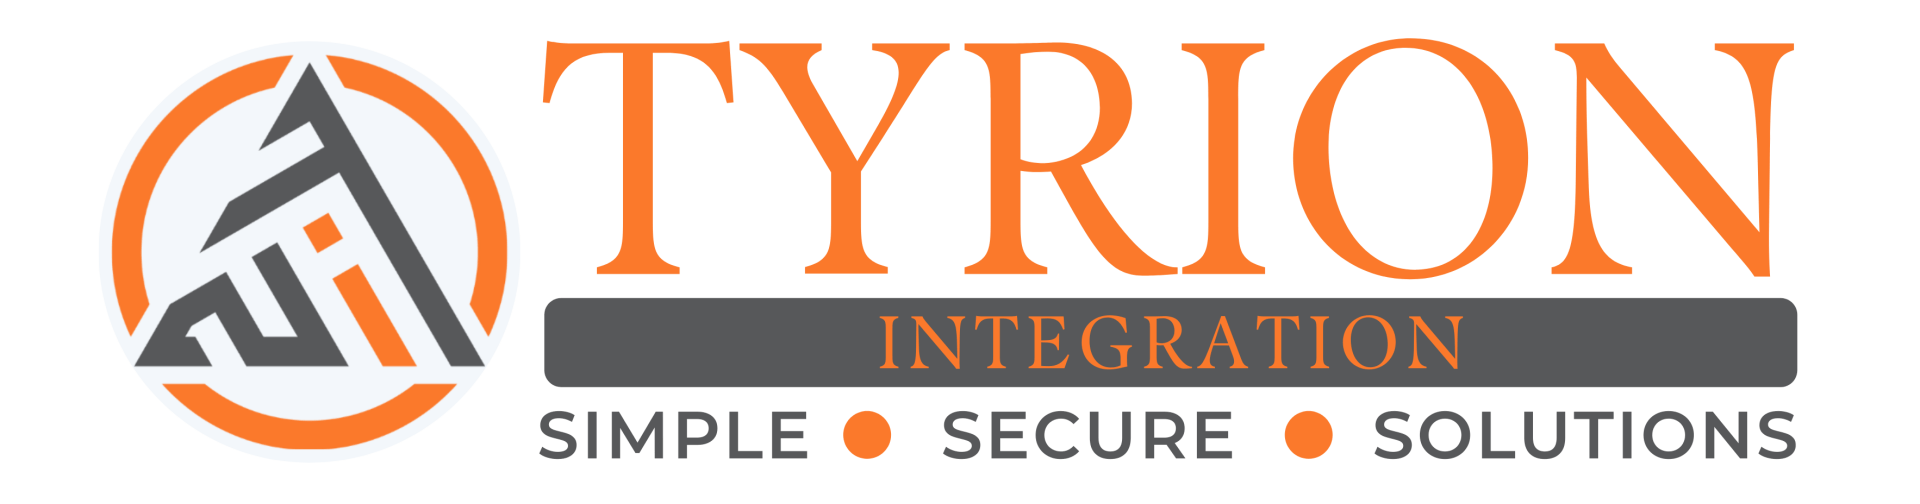 Tyrion Integration Services Inc.